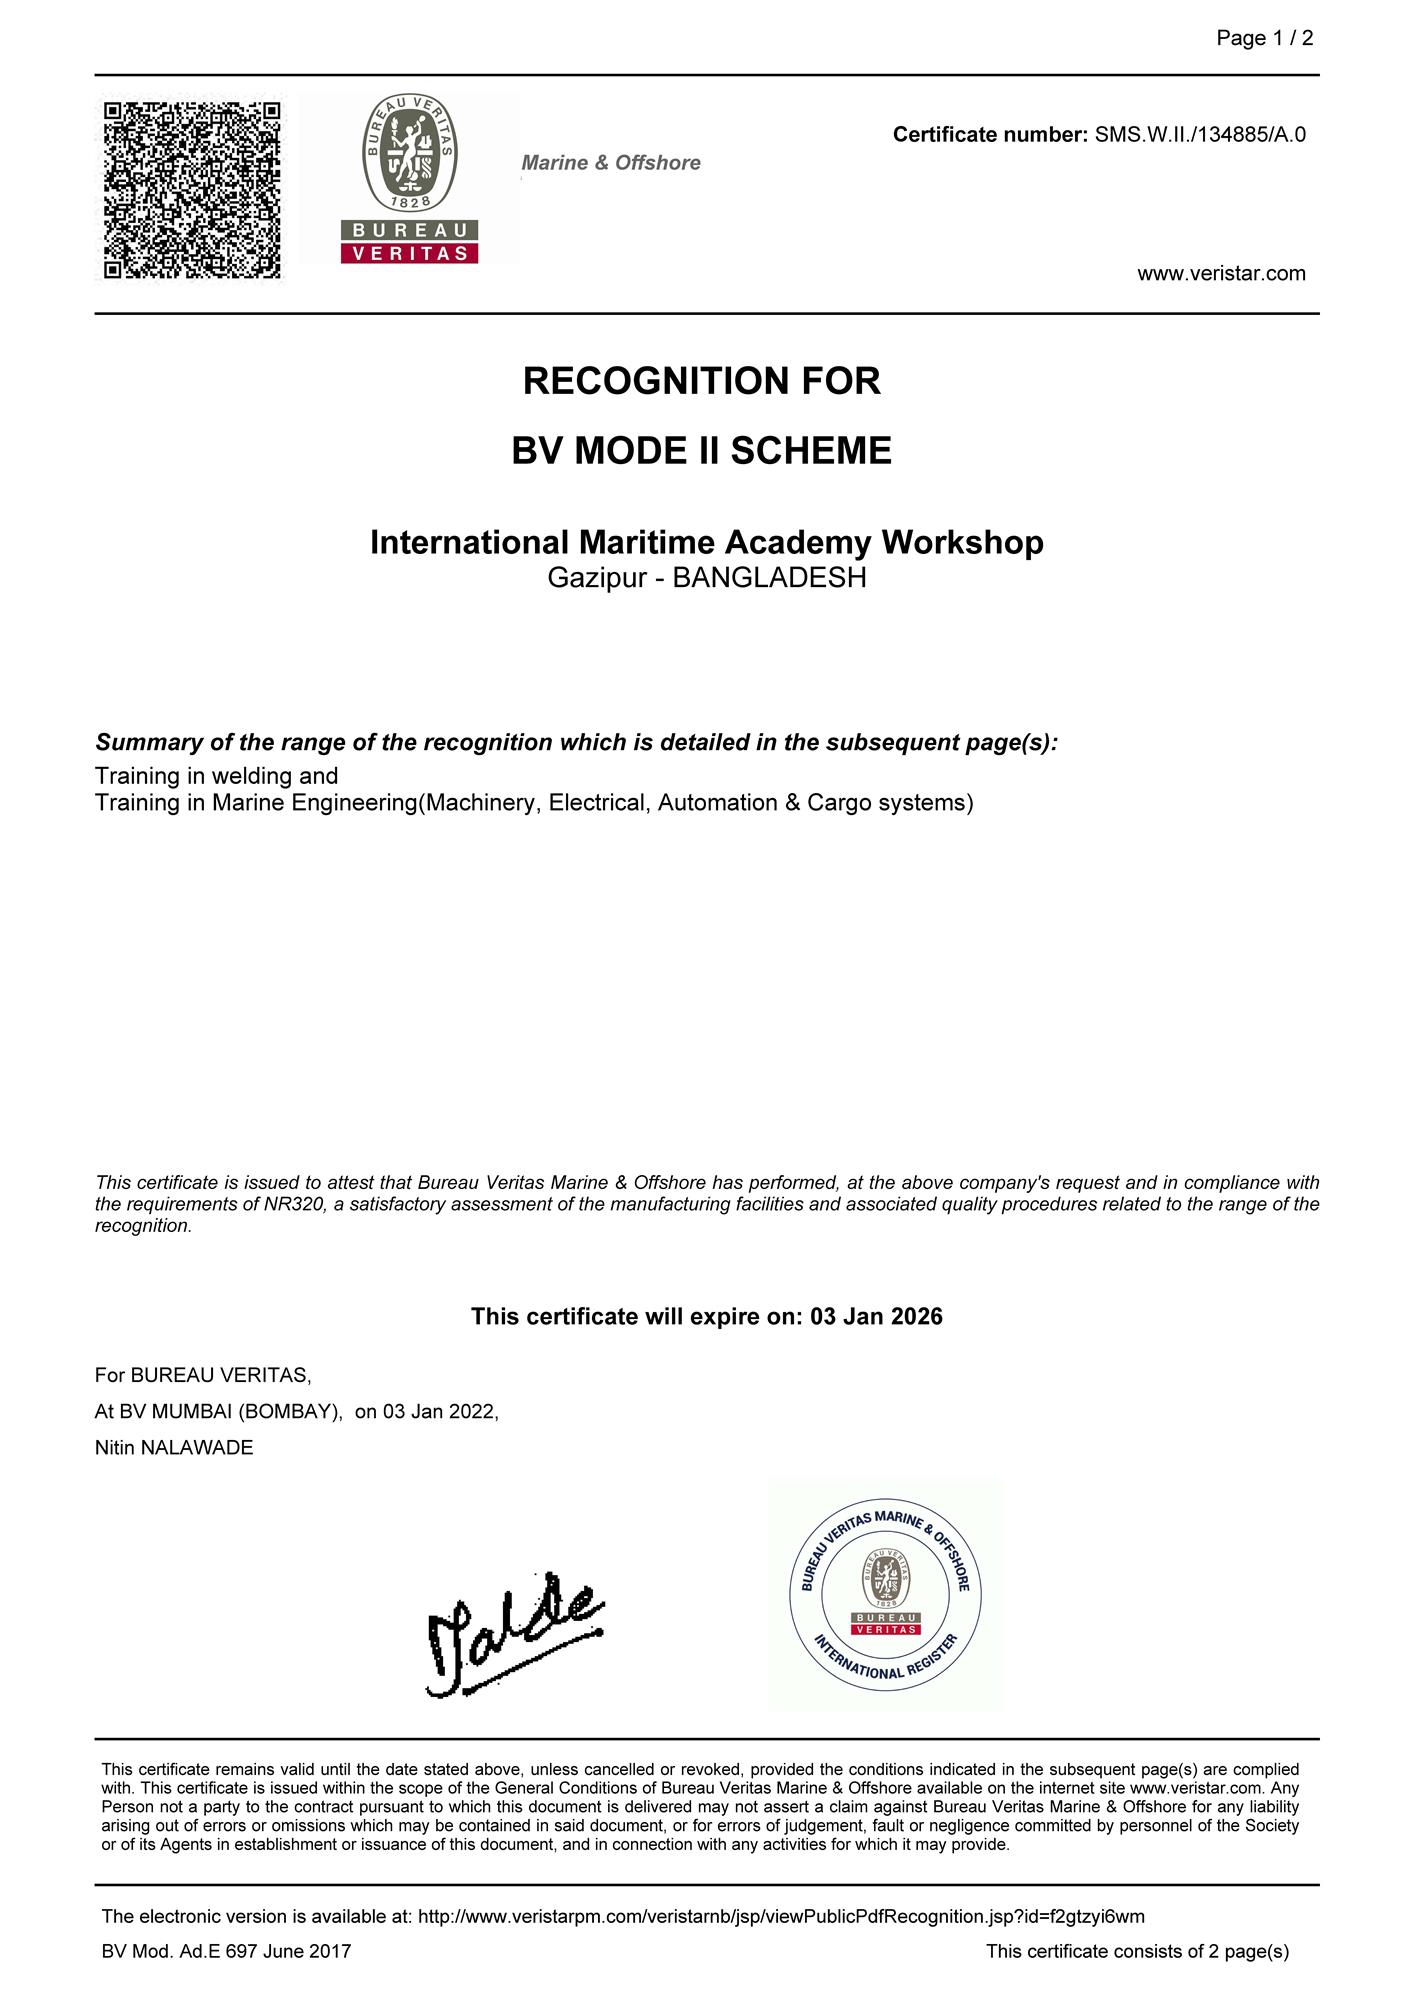 Approval of International Maritime Training Workshop By Bureau Veritas